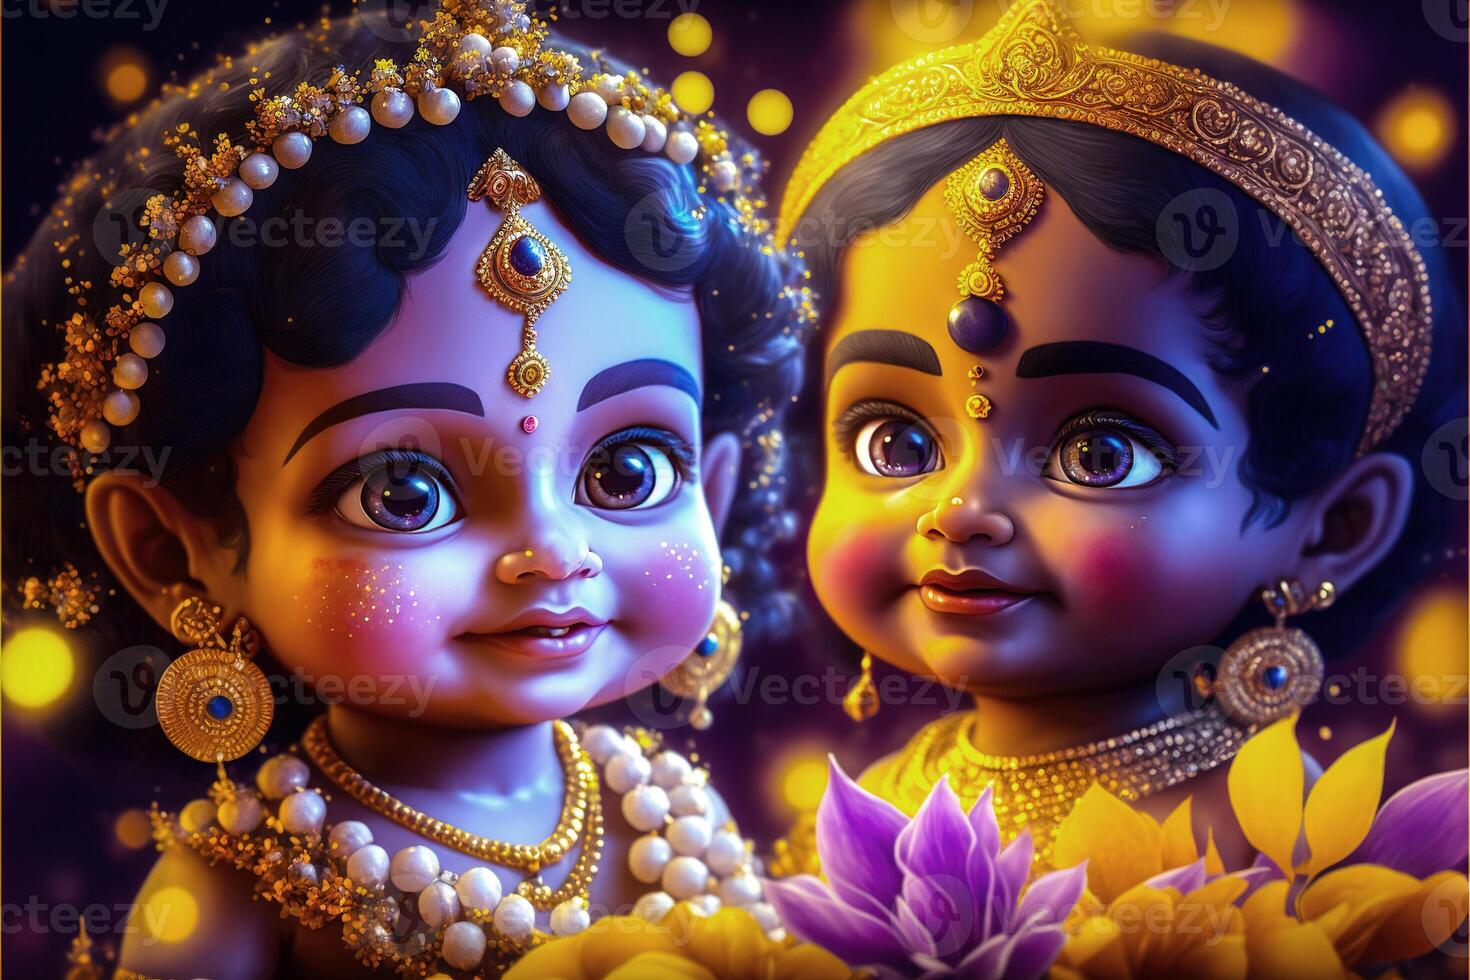 little Krishna and Radha cute image Generative AI 21979721 Stock ...